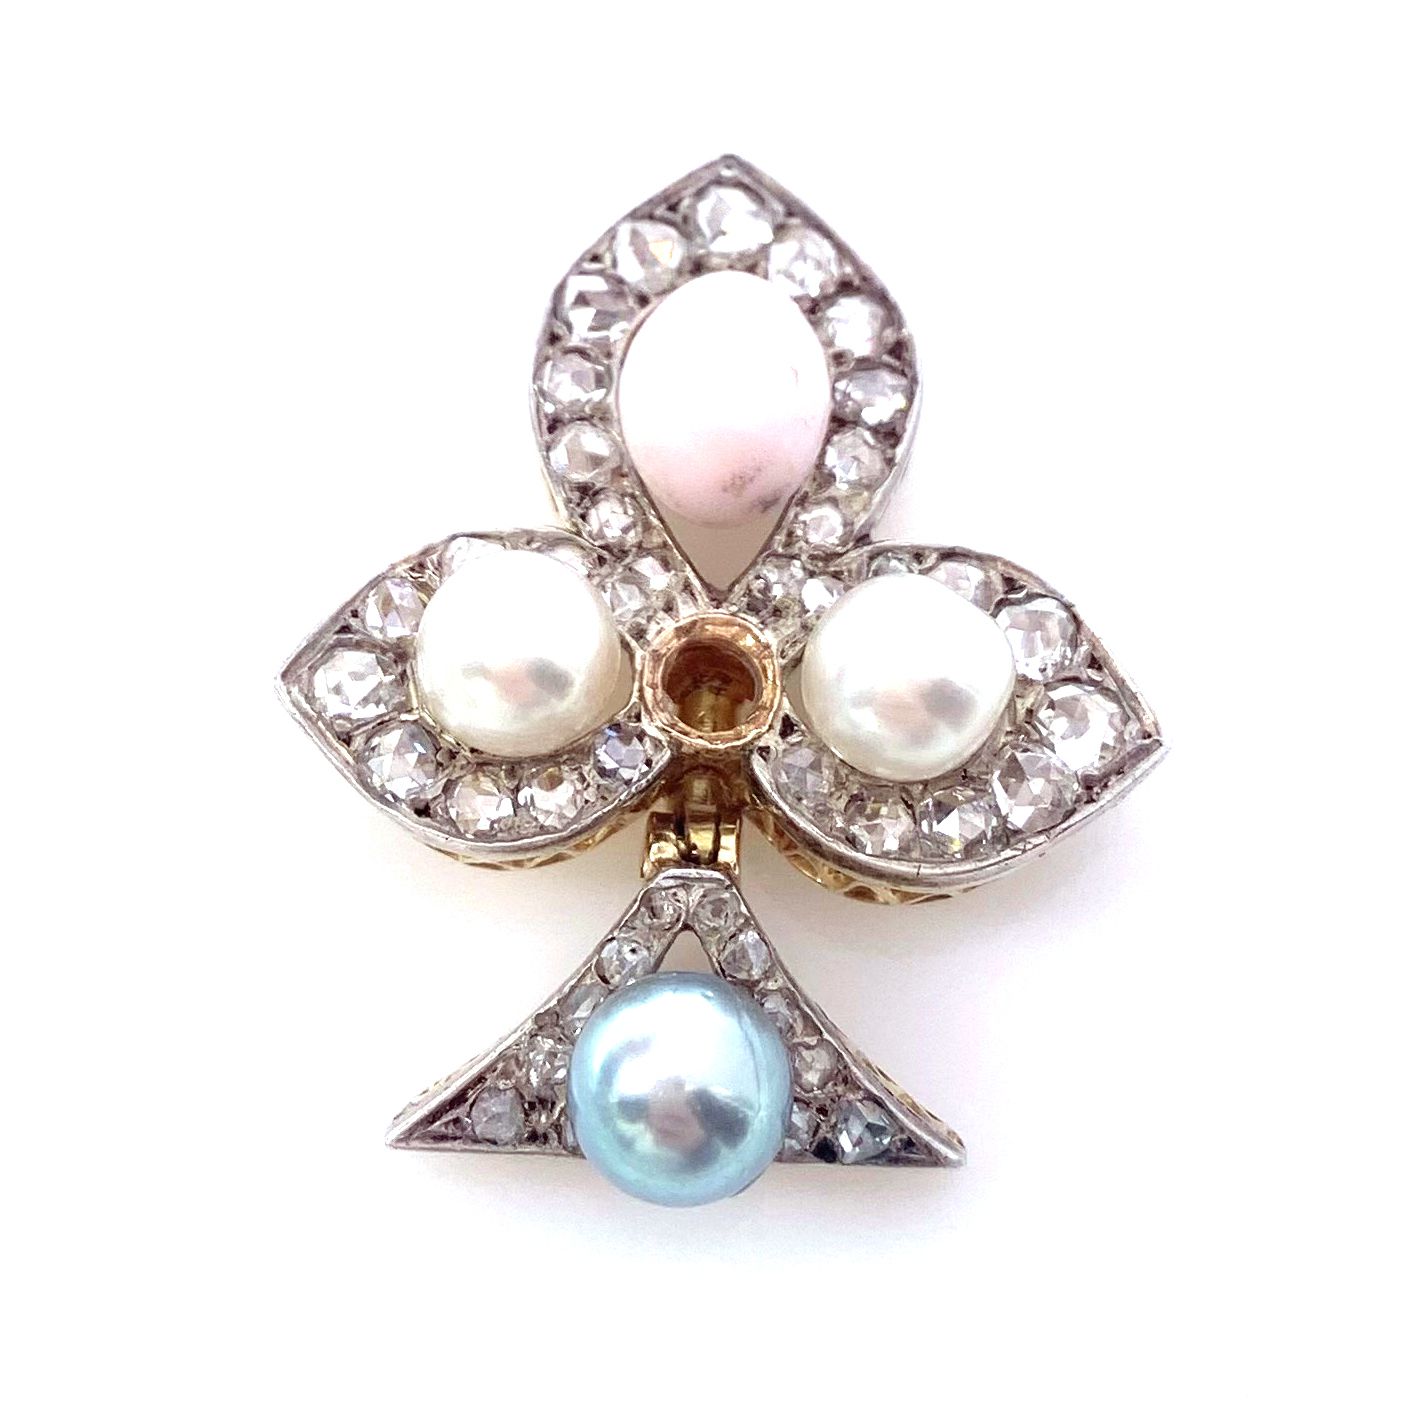 Null 四叶草设计的珠宝饰品，装饰有一颗粉红色的海螺珍珠，两颗可能是精美的白色珍珠（未经测试）和一颗蓝色的珍珠，周围有玫瑰式切割钻石。镶嵌于18K黄金和银。 &hellip;